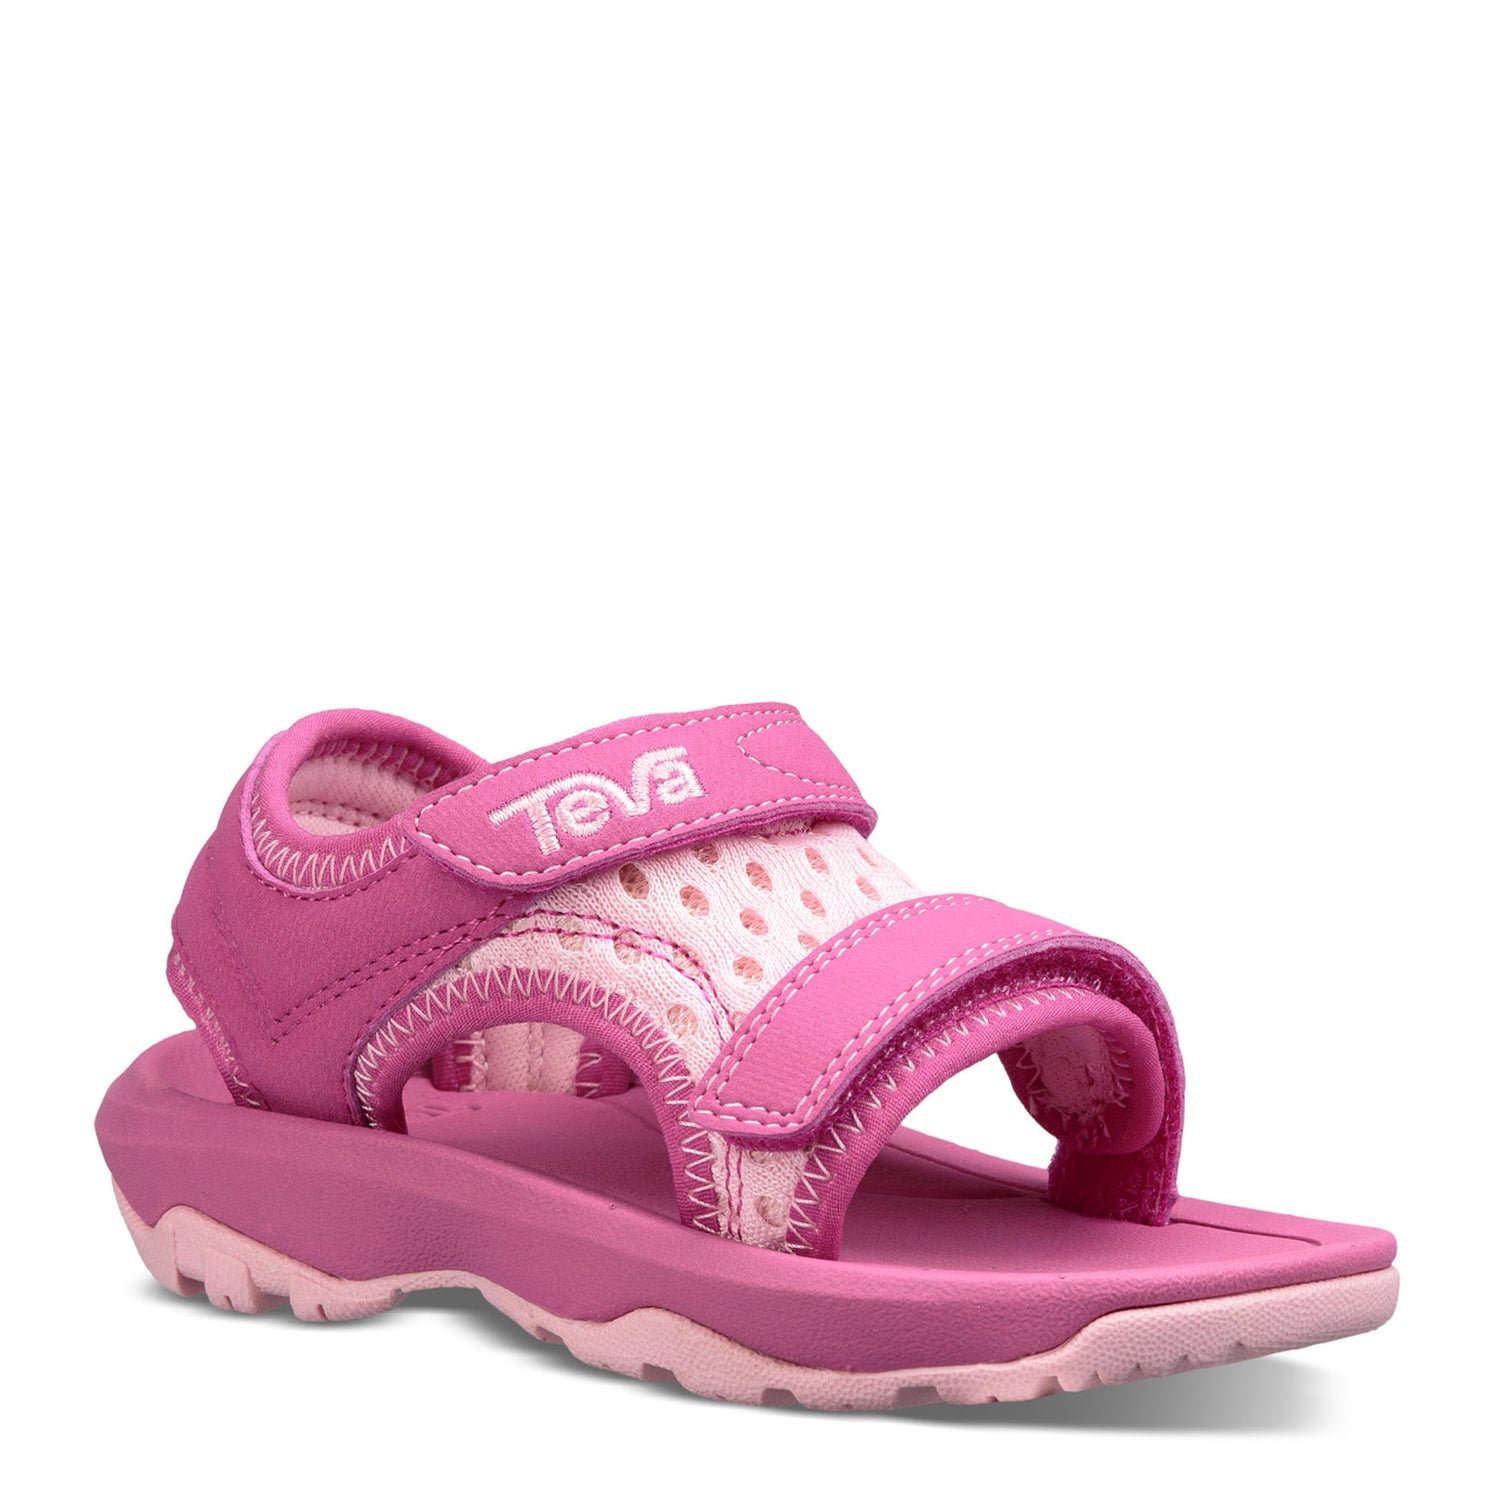 Peltz Shoes  Baby Girl's Teva Psyclone XLT - Toddler HOT PINK 1019538T-PINK